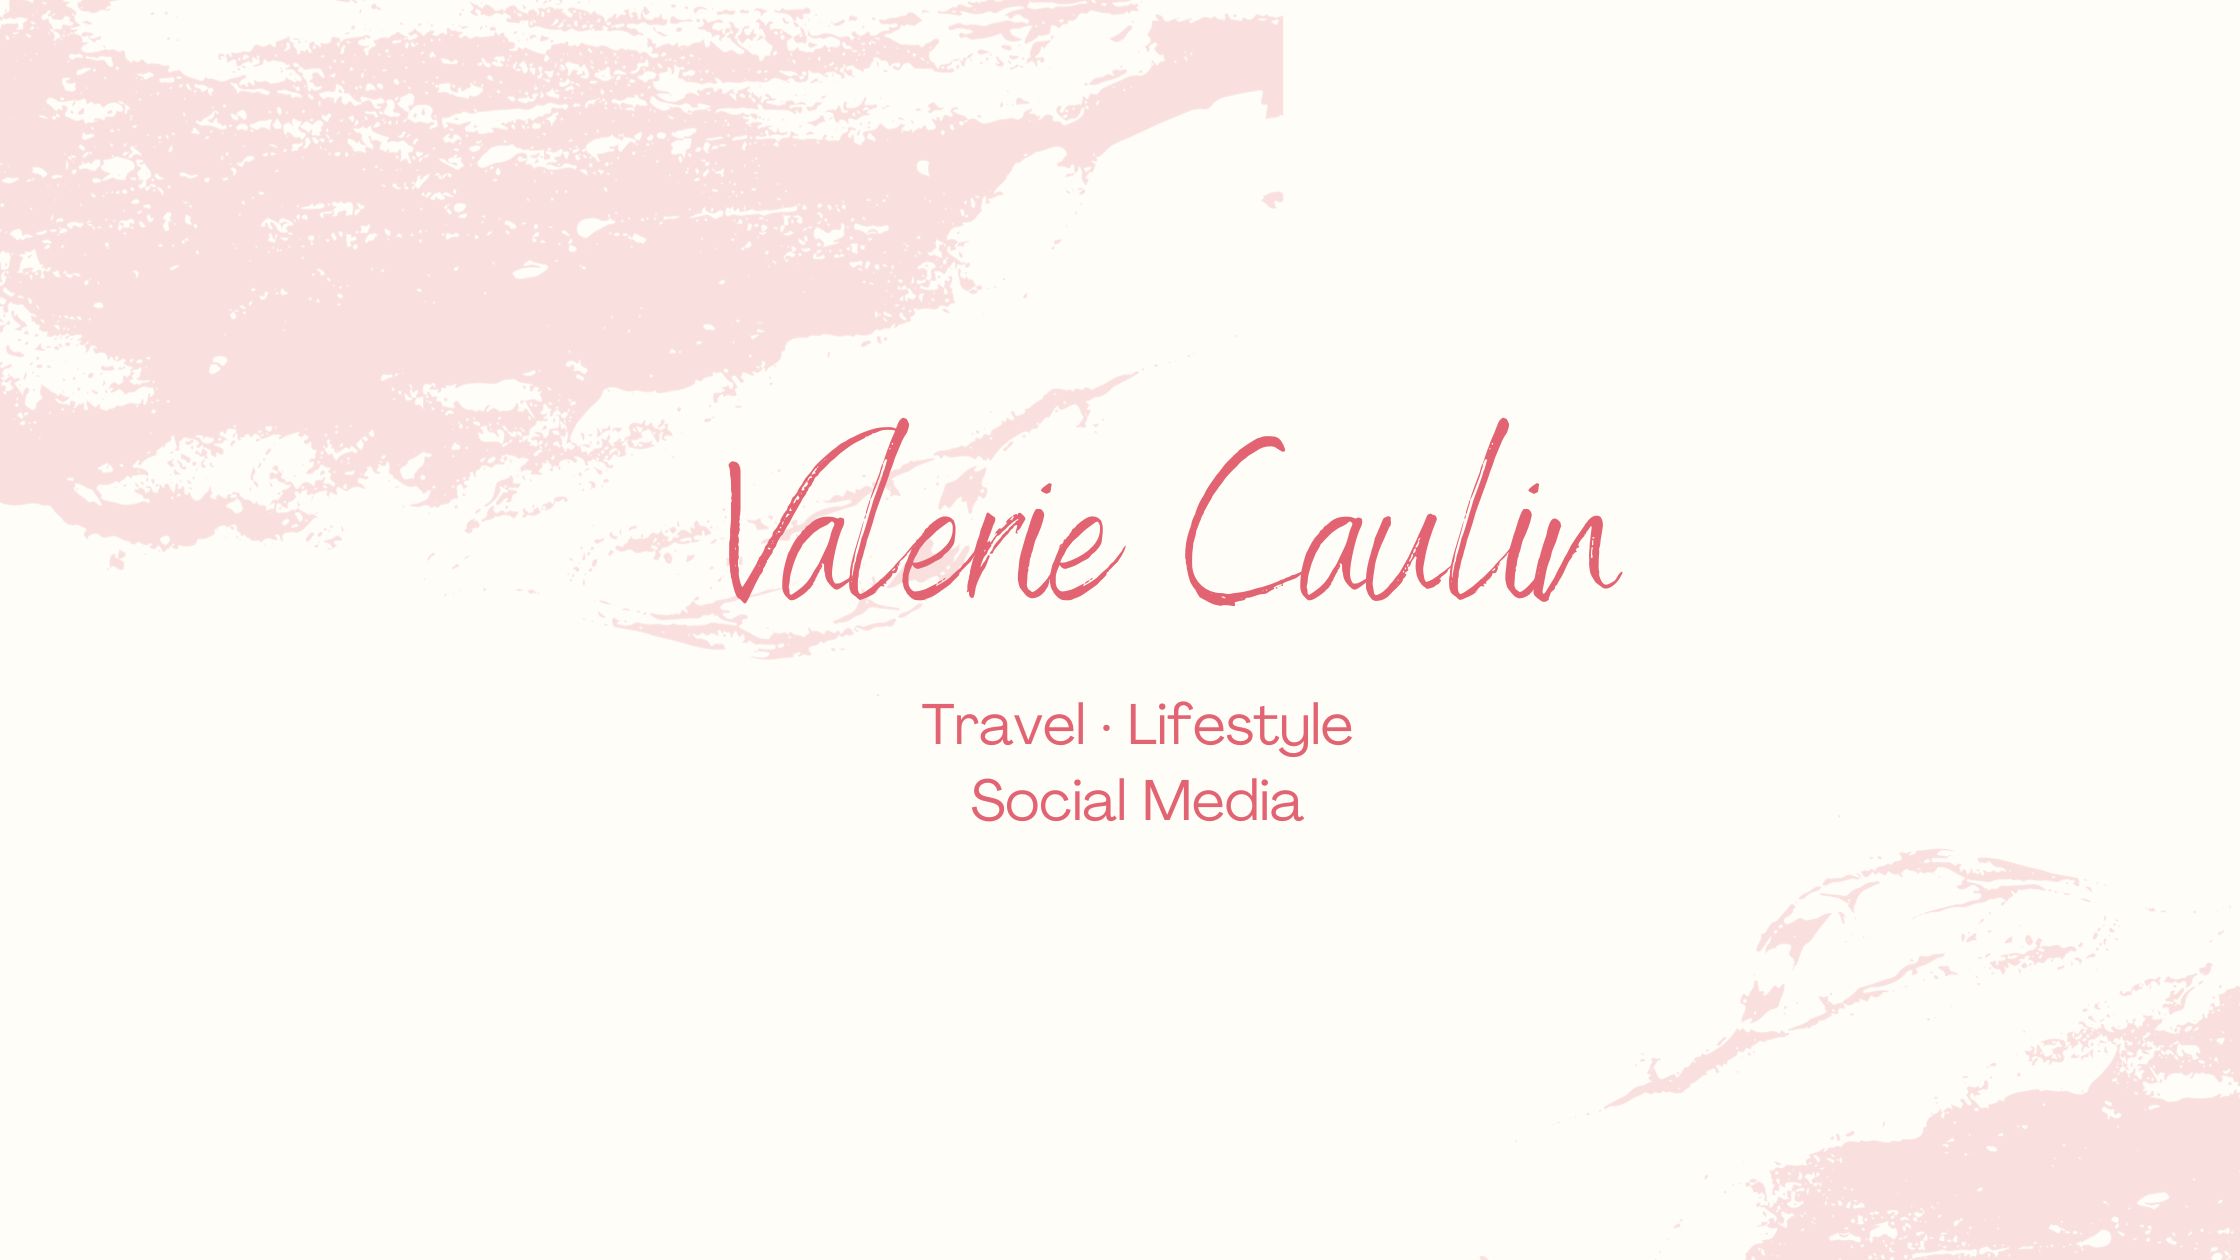 Valerie Caulin